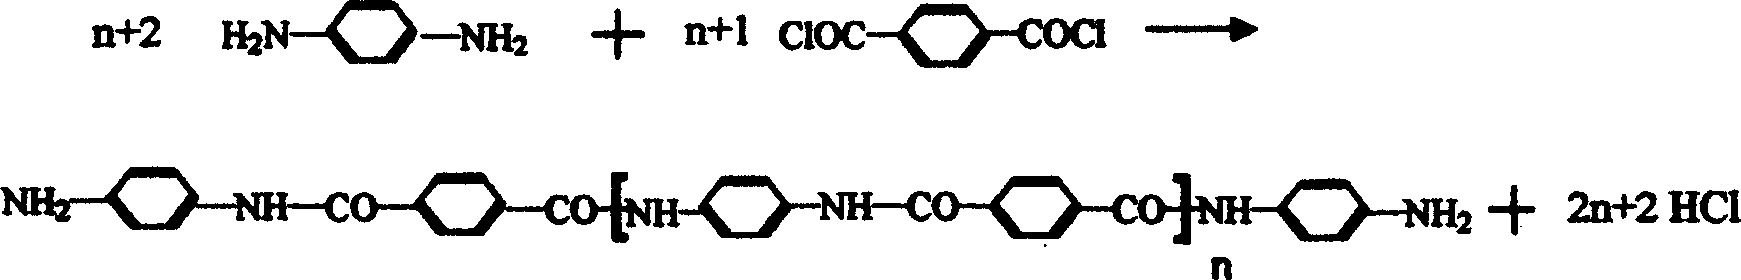 Synthetic method for poly terephthalyl terephaldiamine polymer